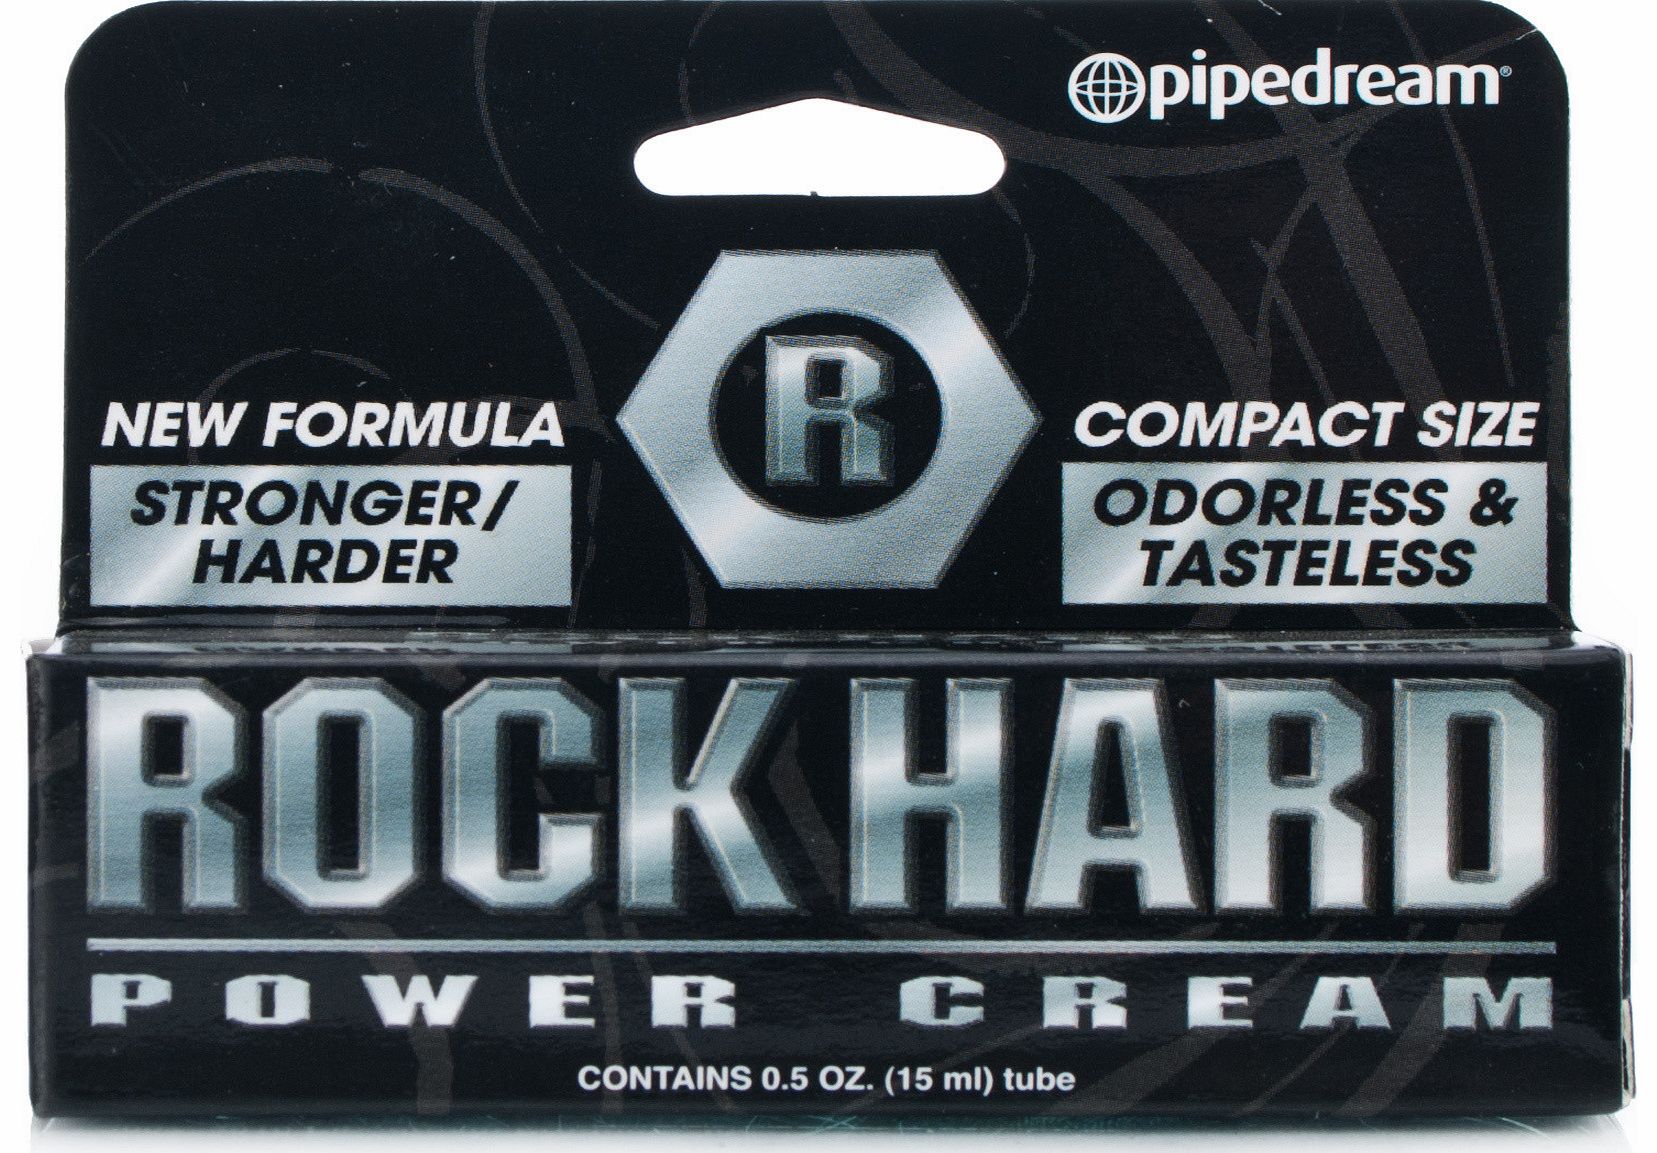 Hard Power Cream Odourless & Tasteless 15ml